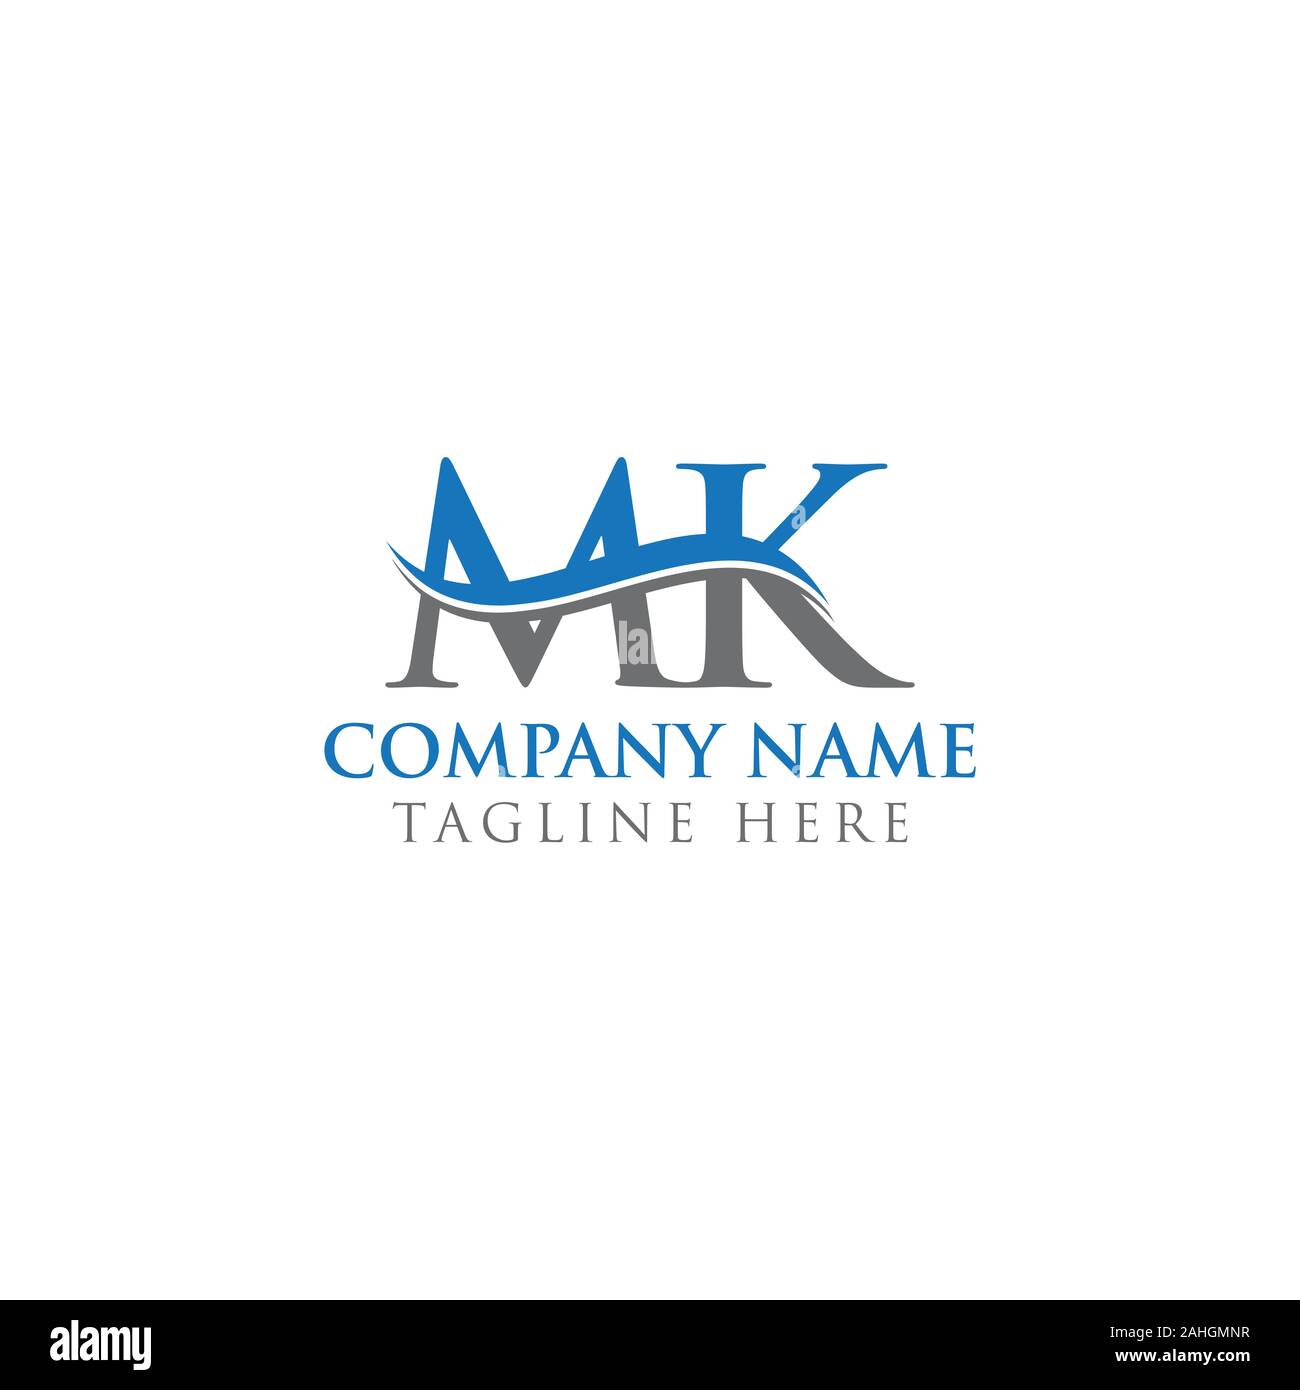 mk photography logo png